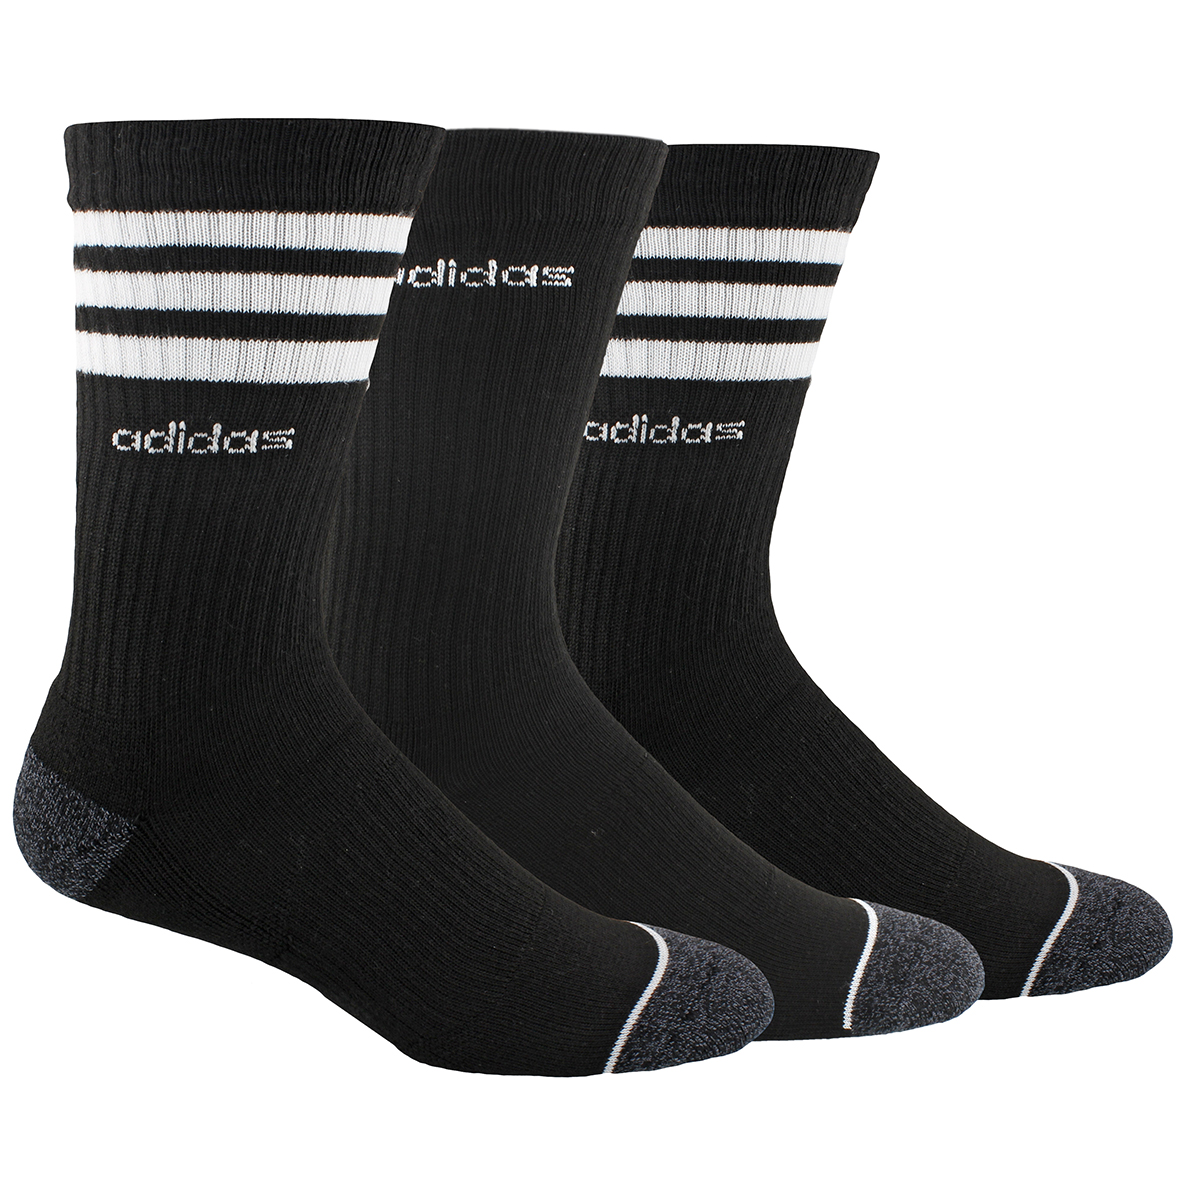 Adidas Men's Cushioned Color Crew Socks, 3-Pack - Black, 10-13